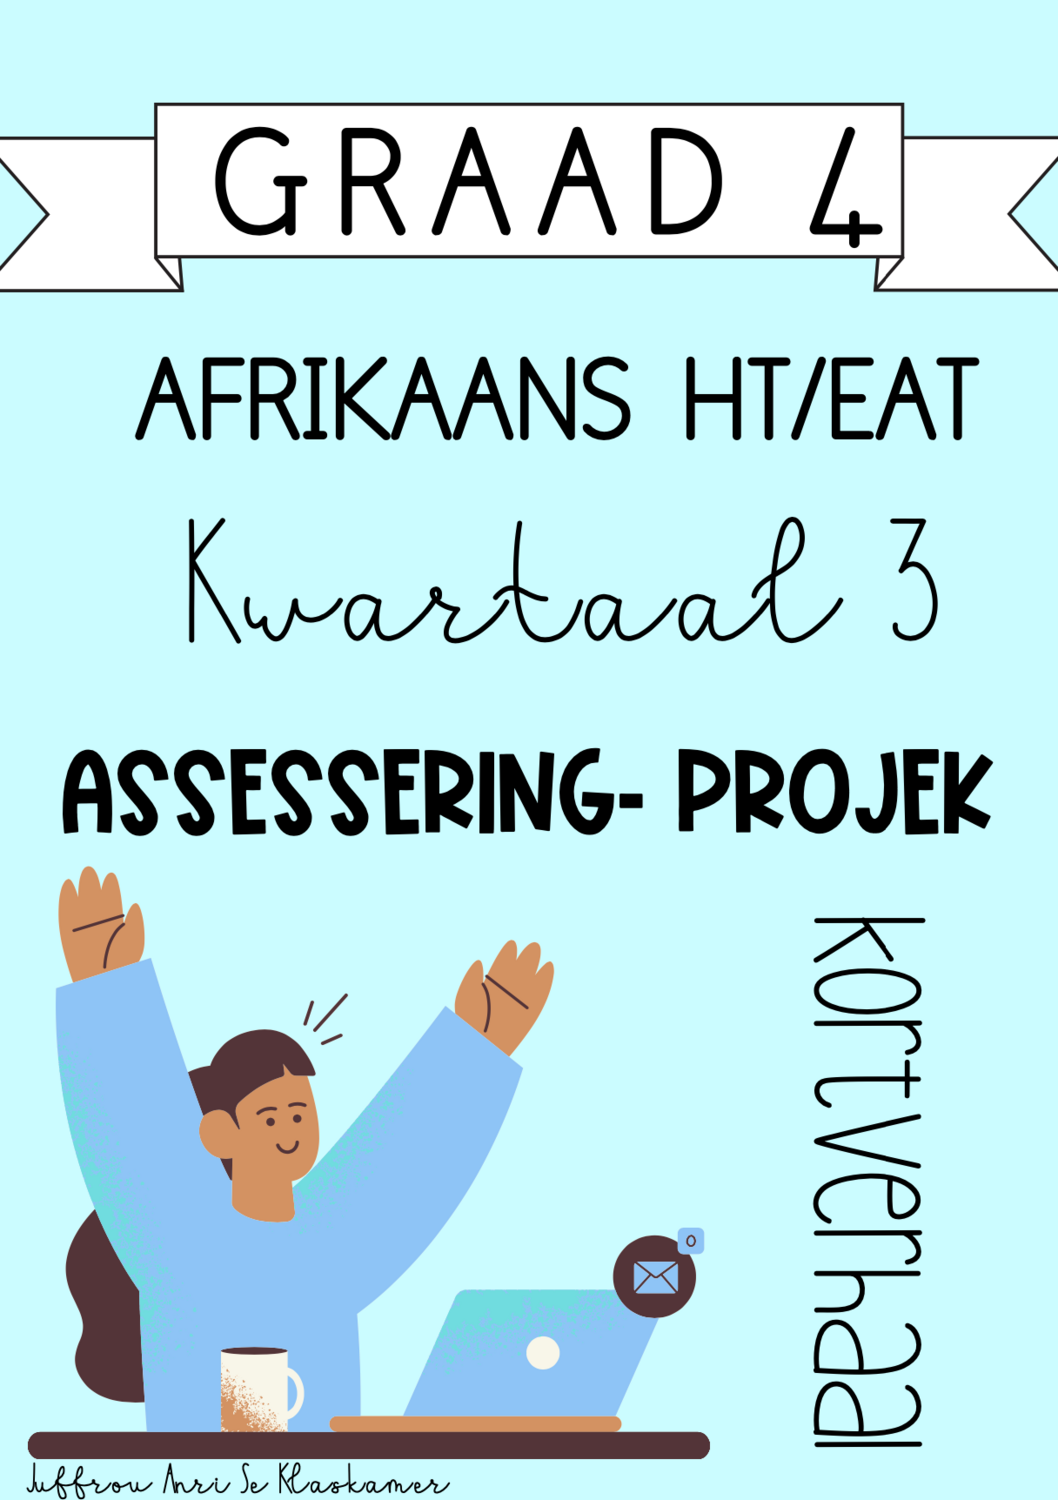 Graad 4 Afrikaans HT / EAT kwartaal 3 projek (2023/2024)